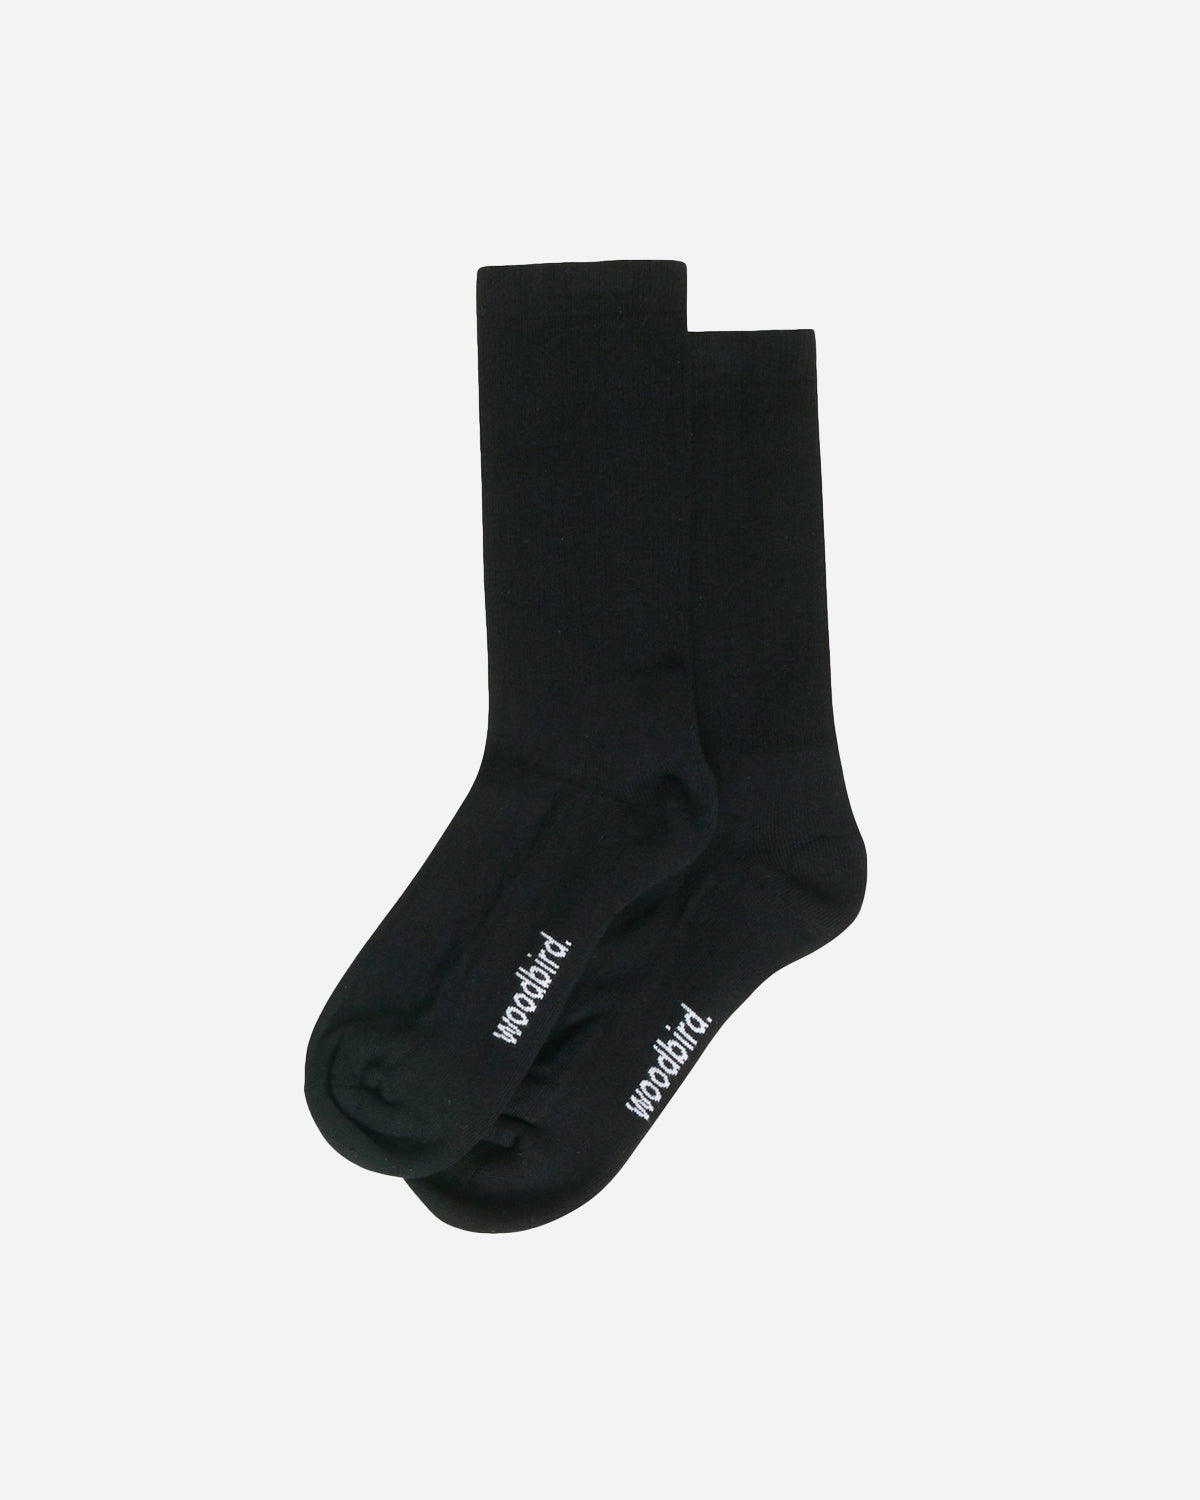 Tennis Socks - Black